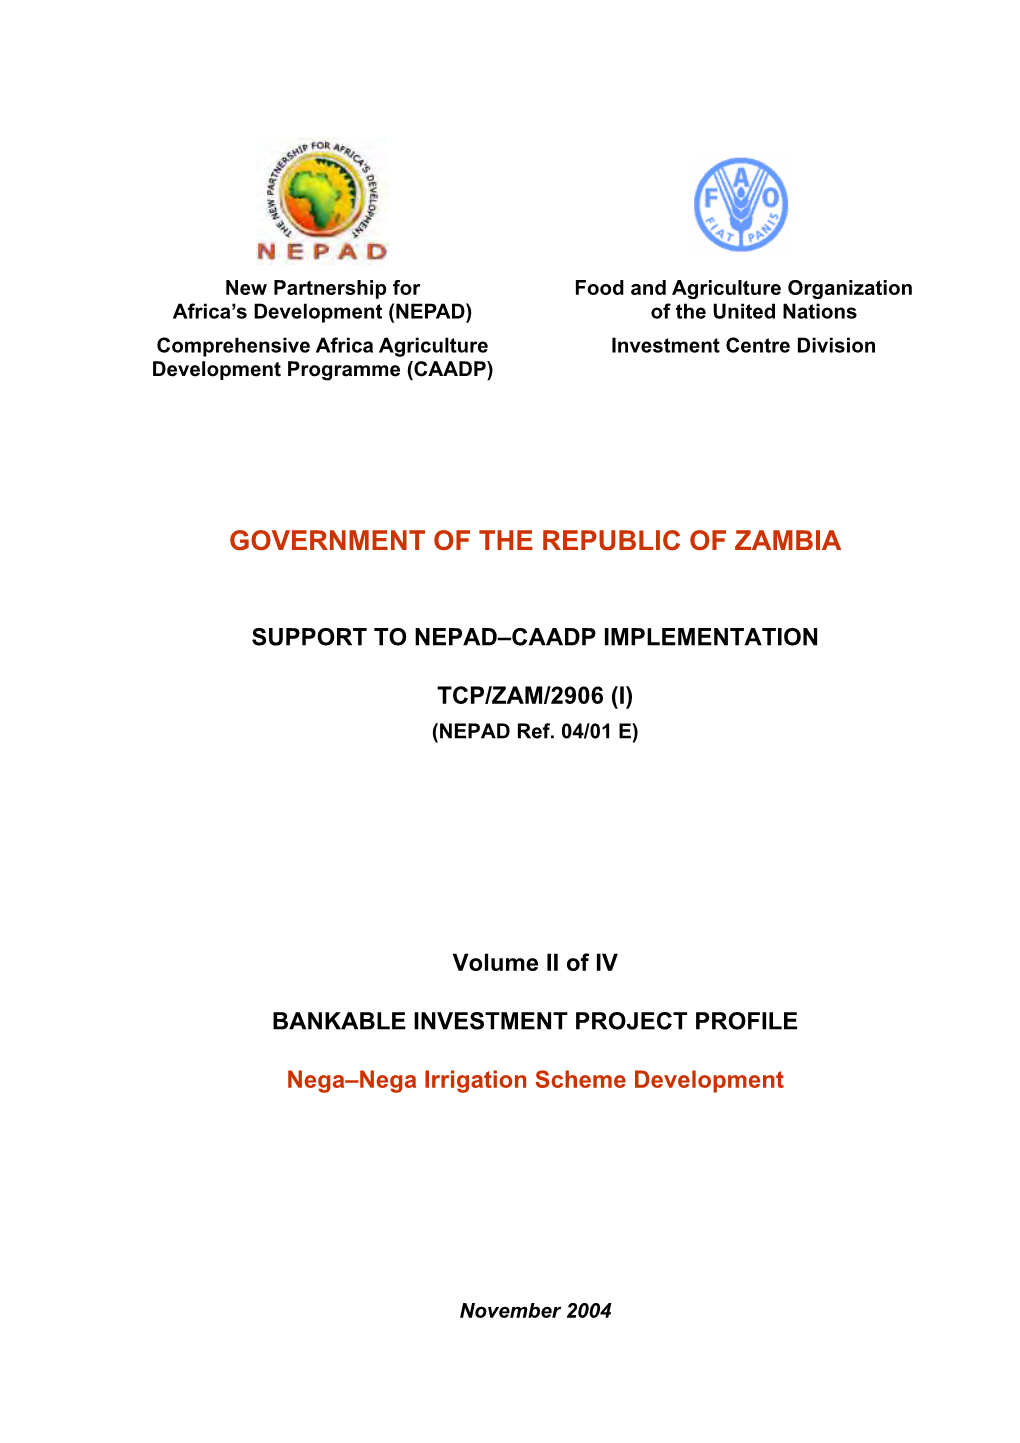 Government of the Republic of Zambia